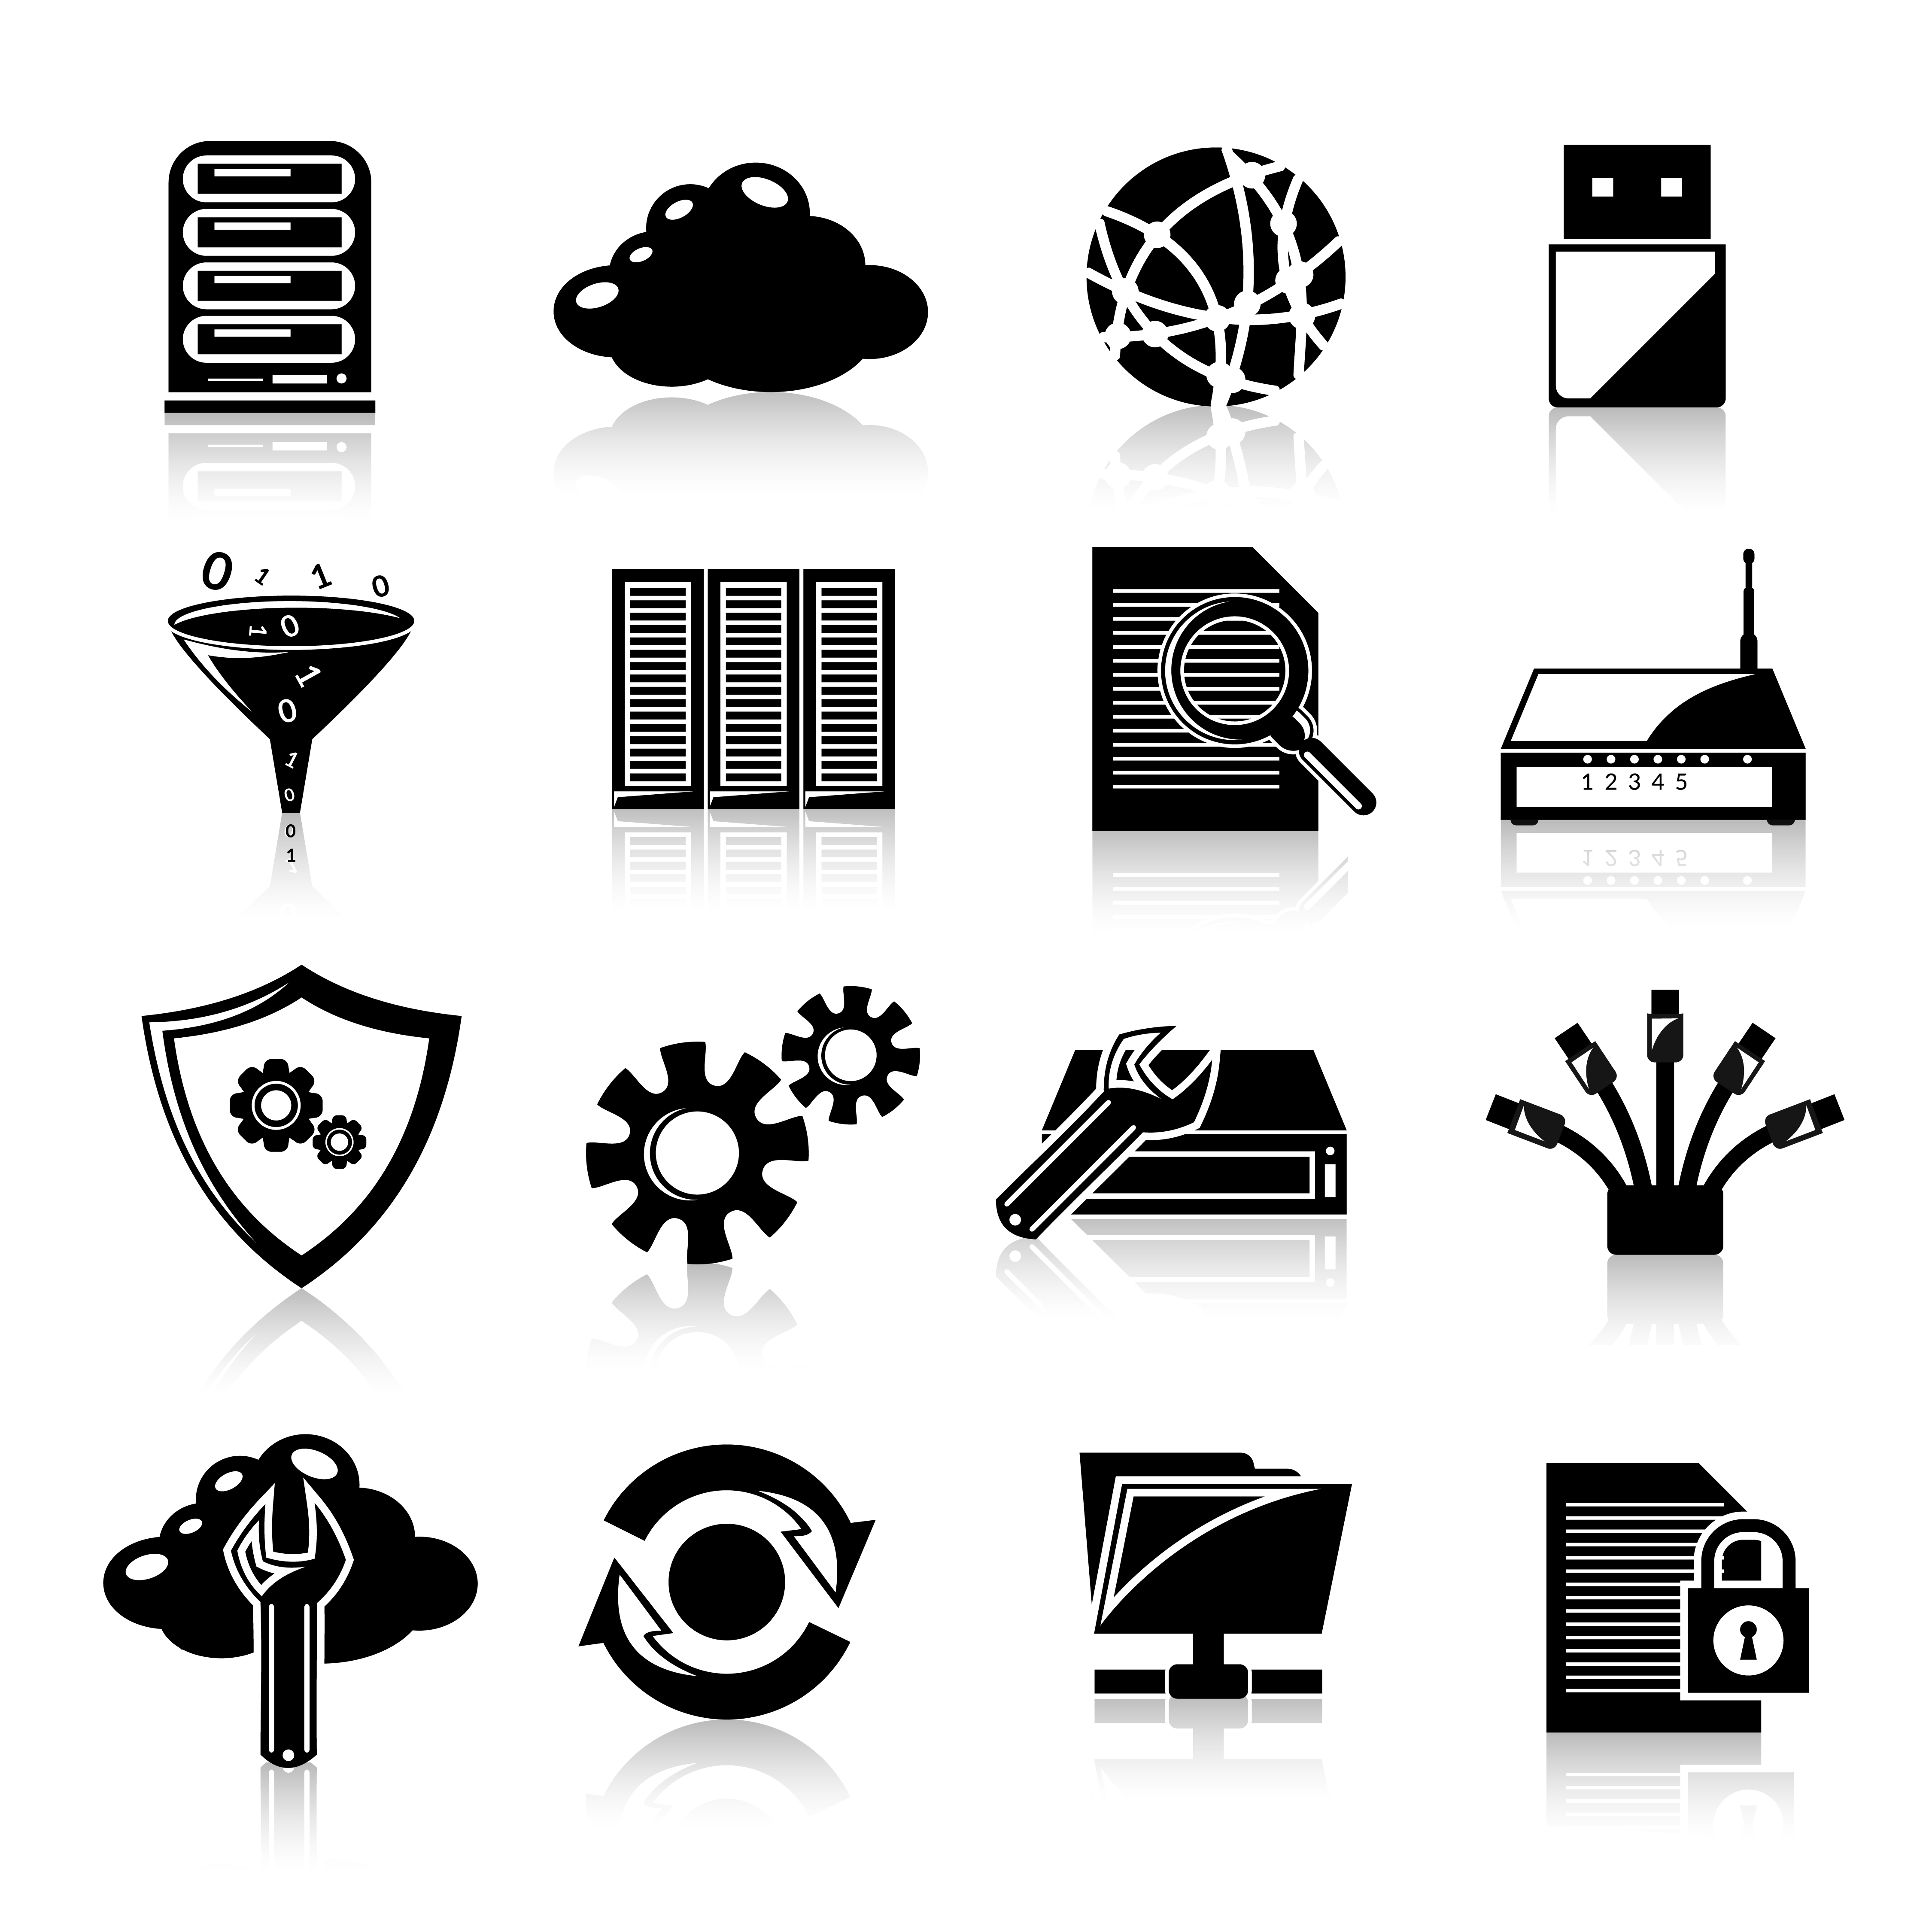 Download Database icons black - Download Free Vectors, Clipart Graphics & Vector Art